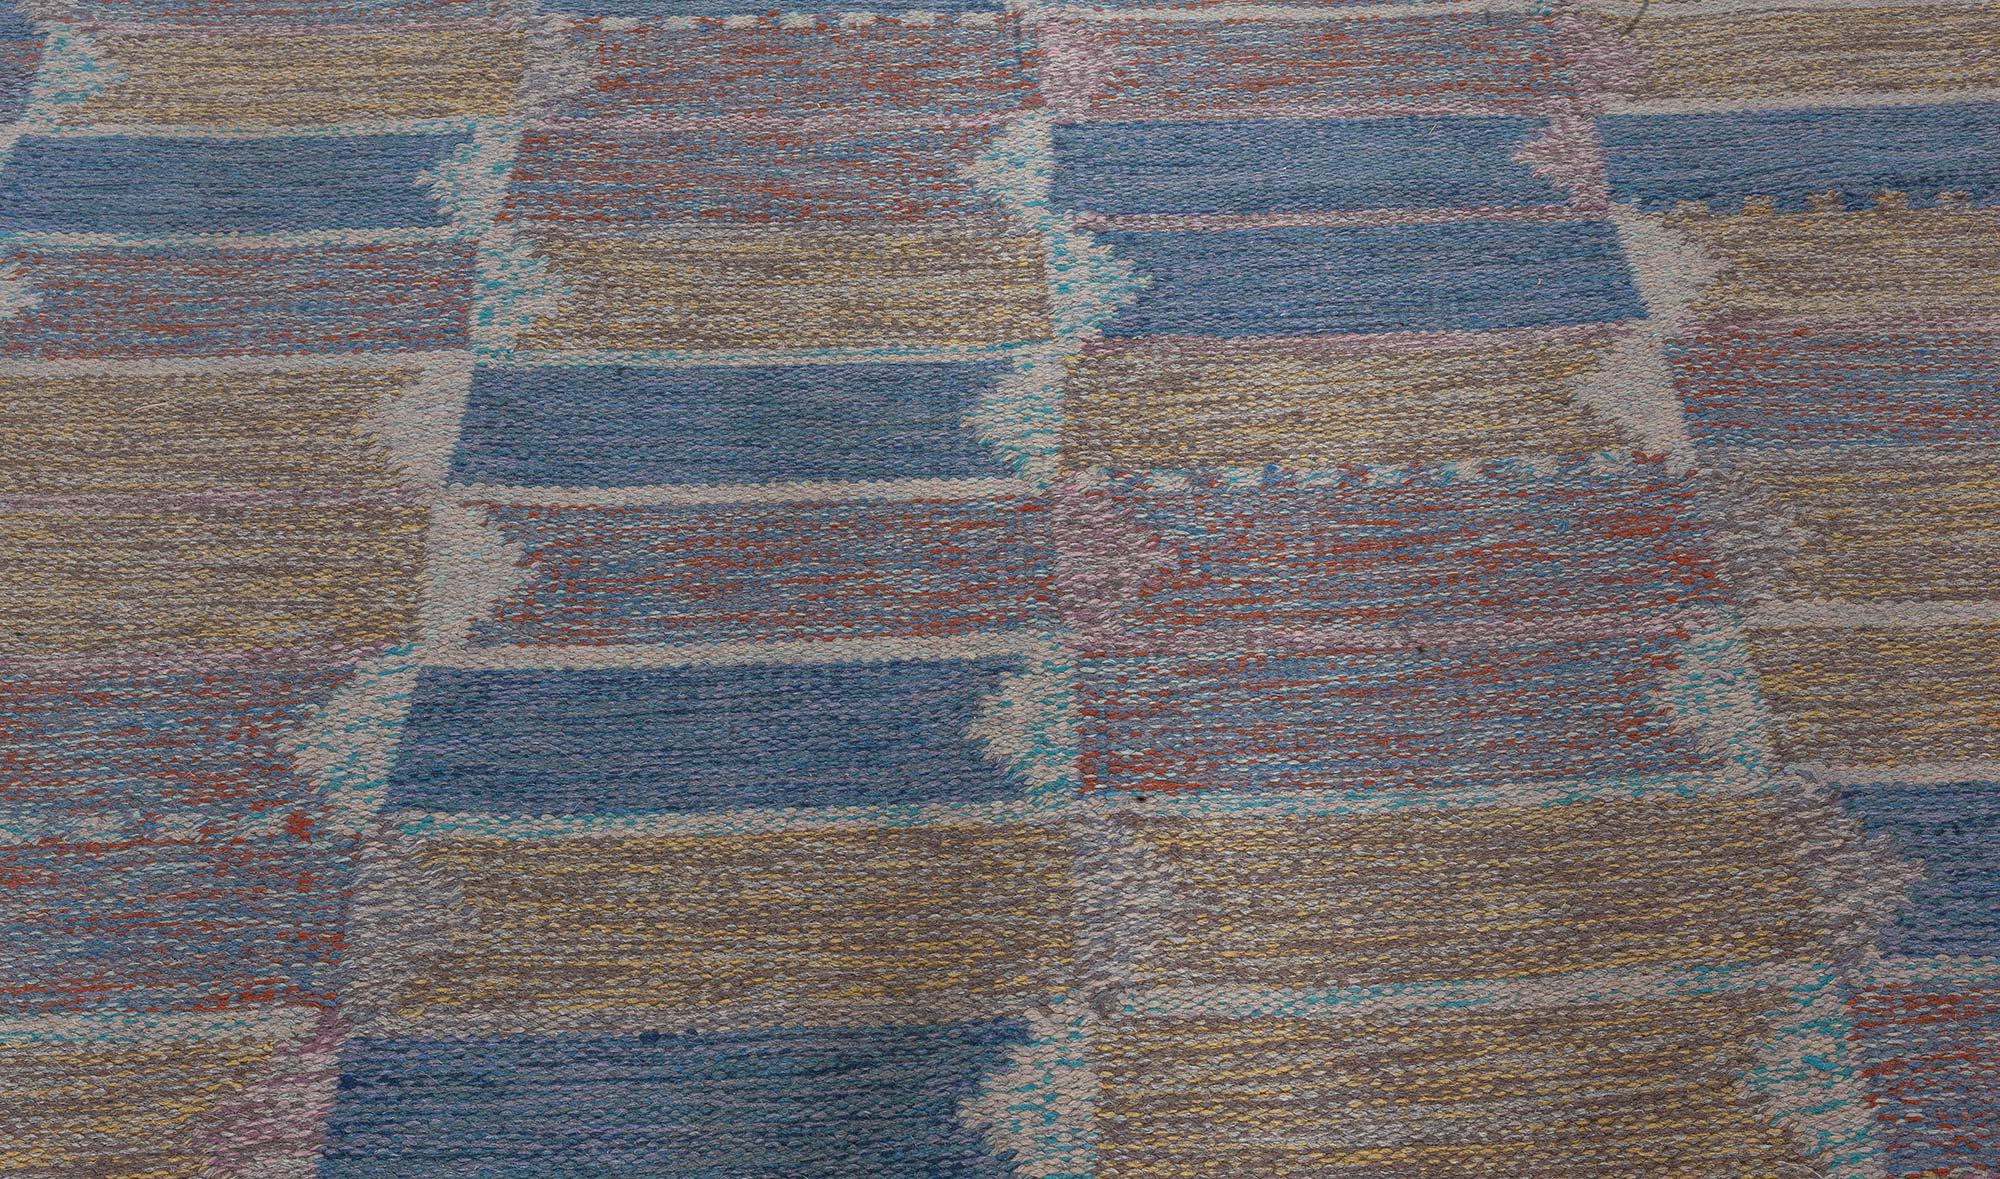 Vintage Swedish flat woven rug
Size: 6'0